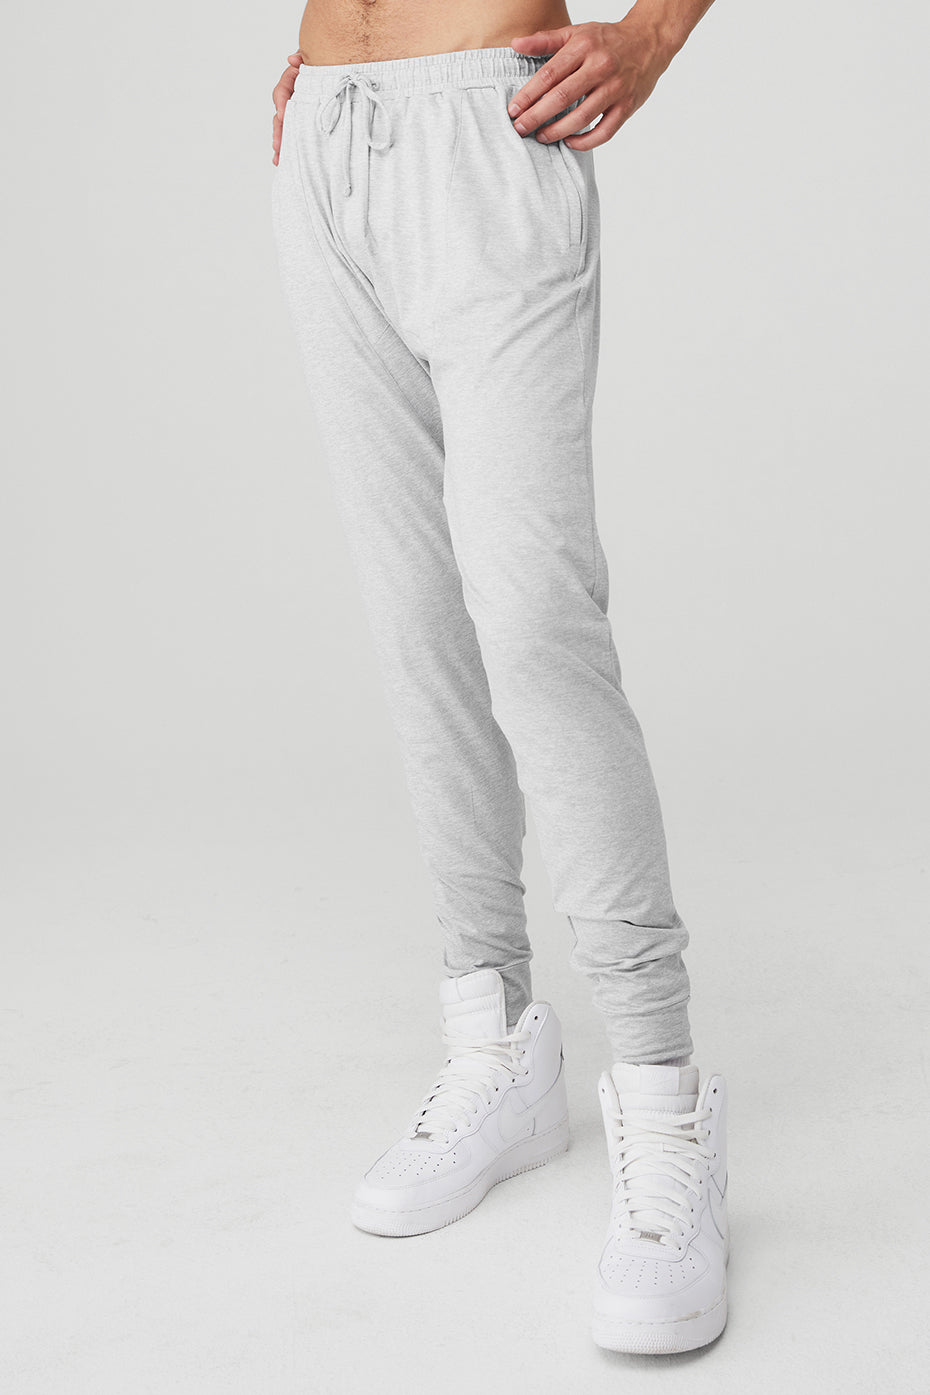 YUHAOTIN White Sweatpants Men New Men's Japanese Loose Flying Pants Large  Fashion Casual Sports Leggings,Grey 